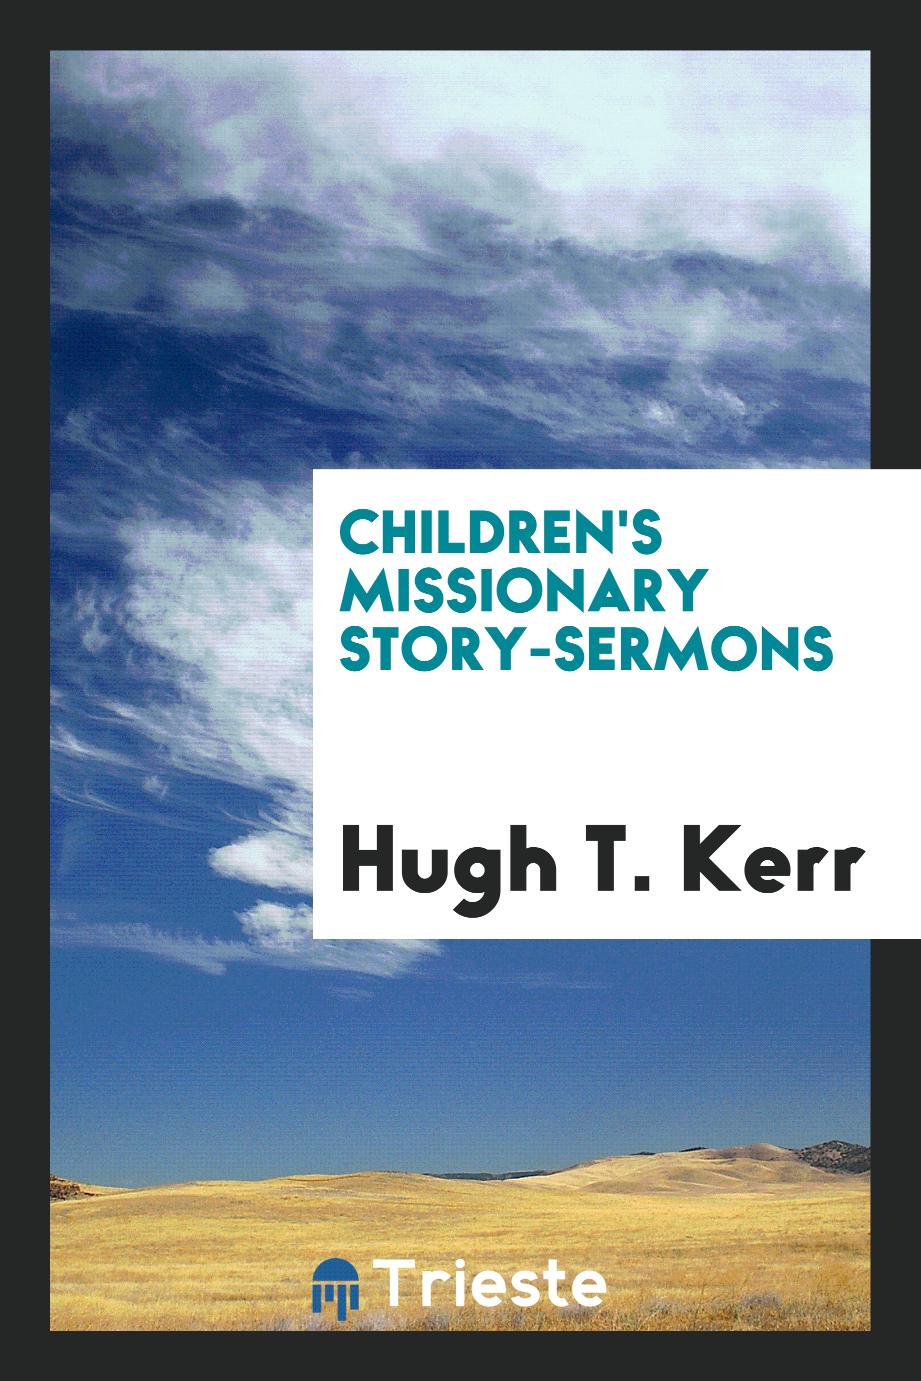 Children's missionary story-sermons